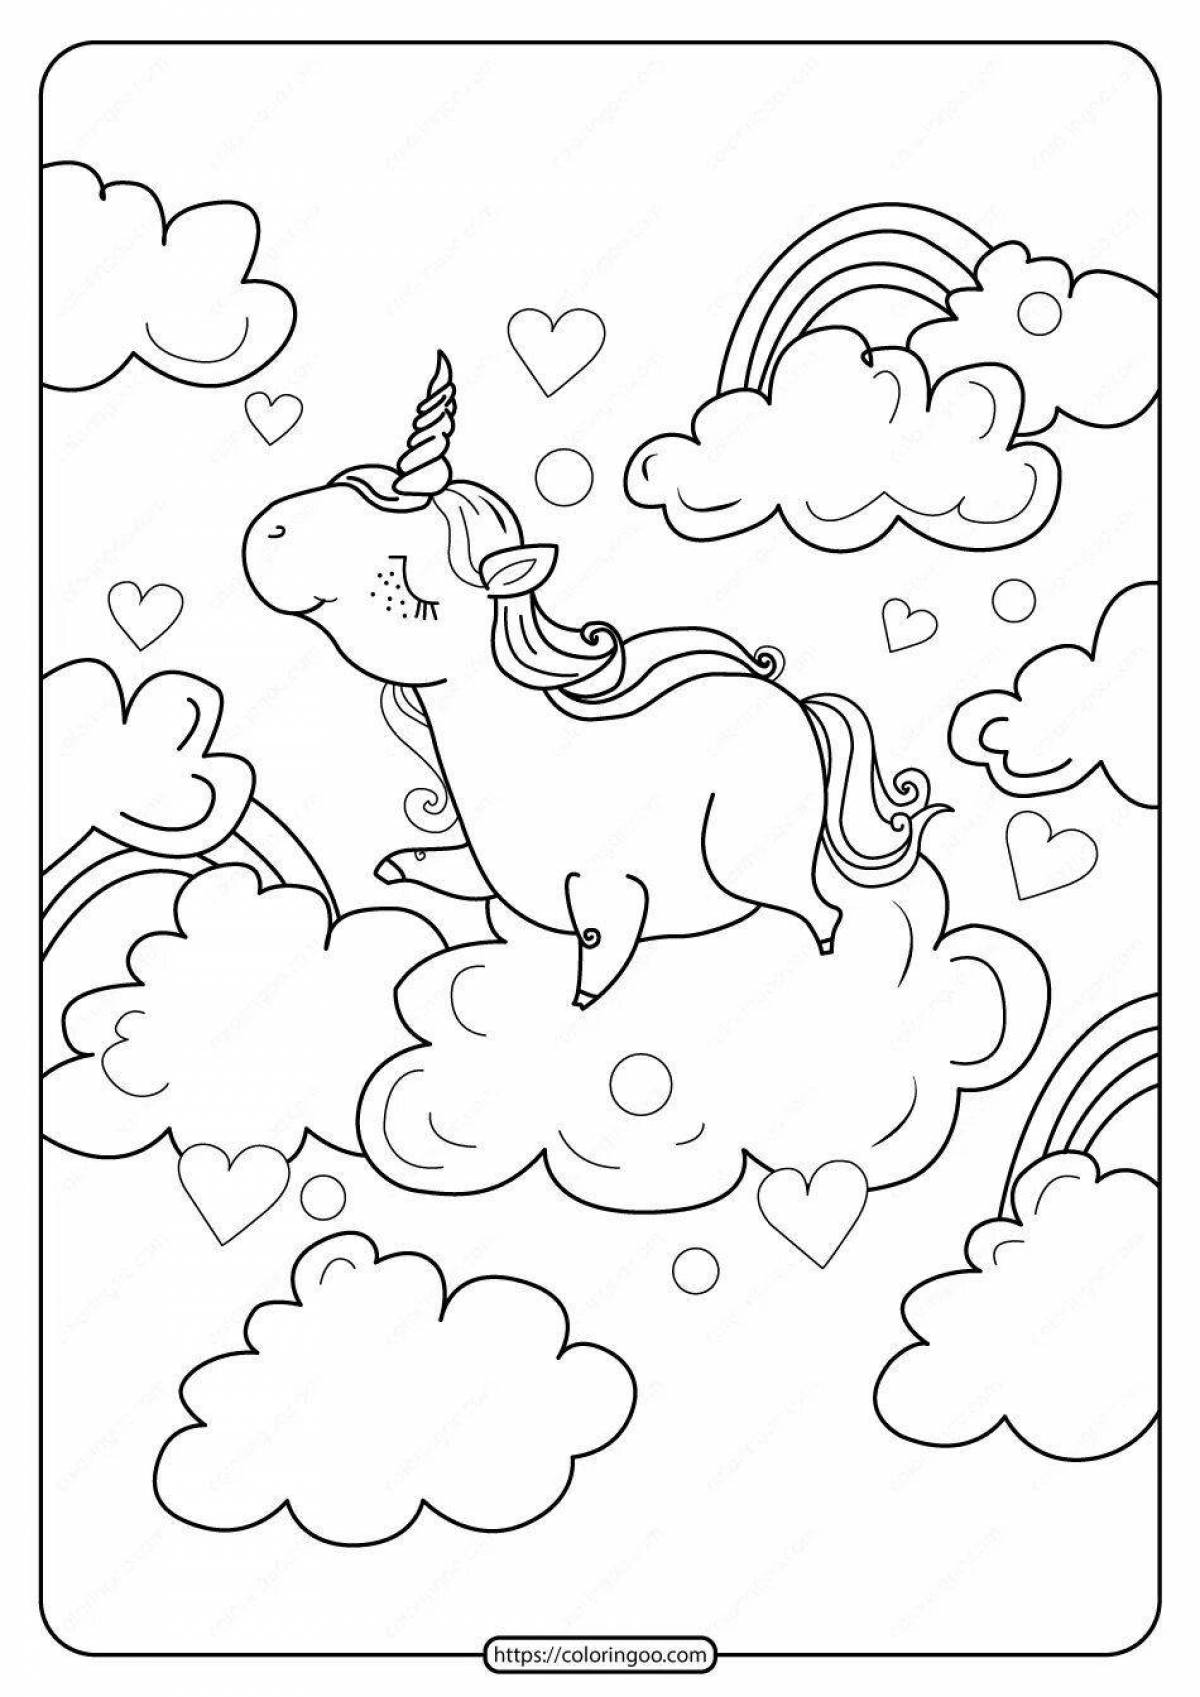 Mystical coloring unicorn cloud